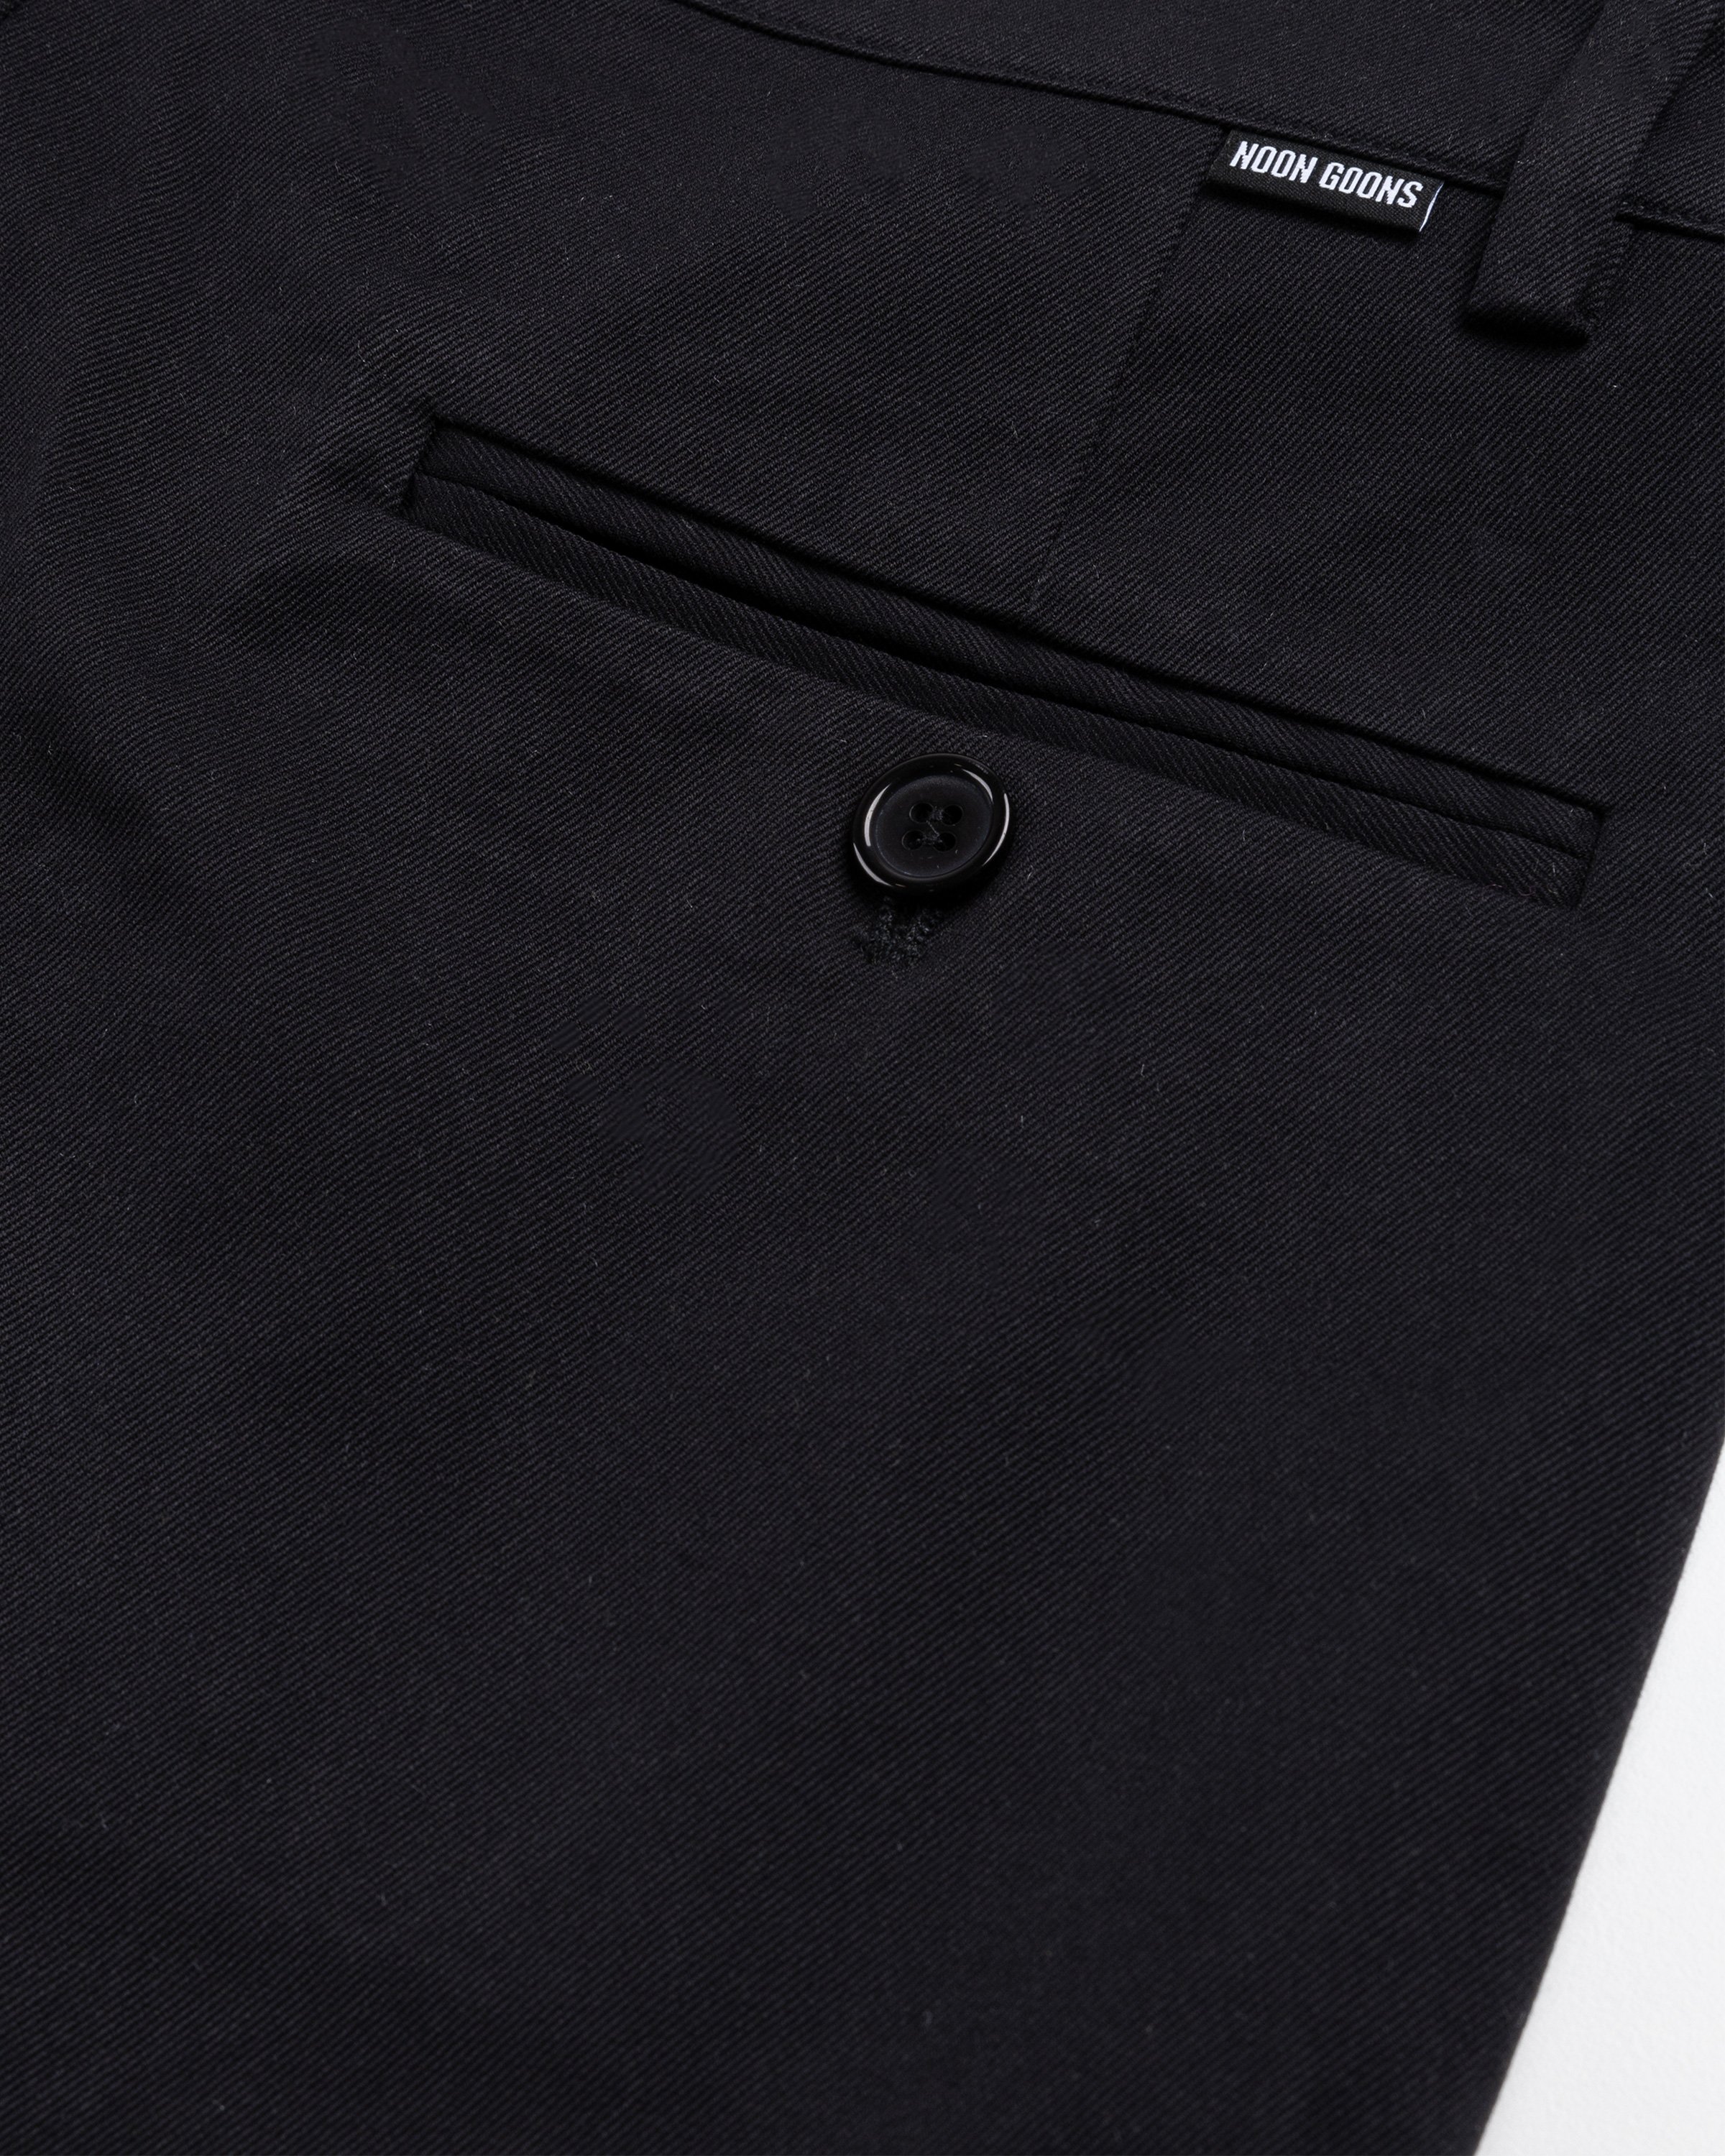 Noon Goons - Profile Pant Black - Clothing - Black - Image 5